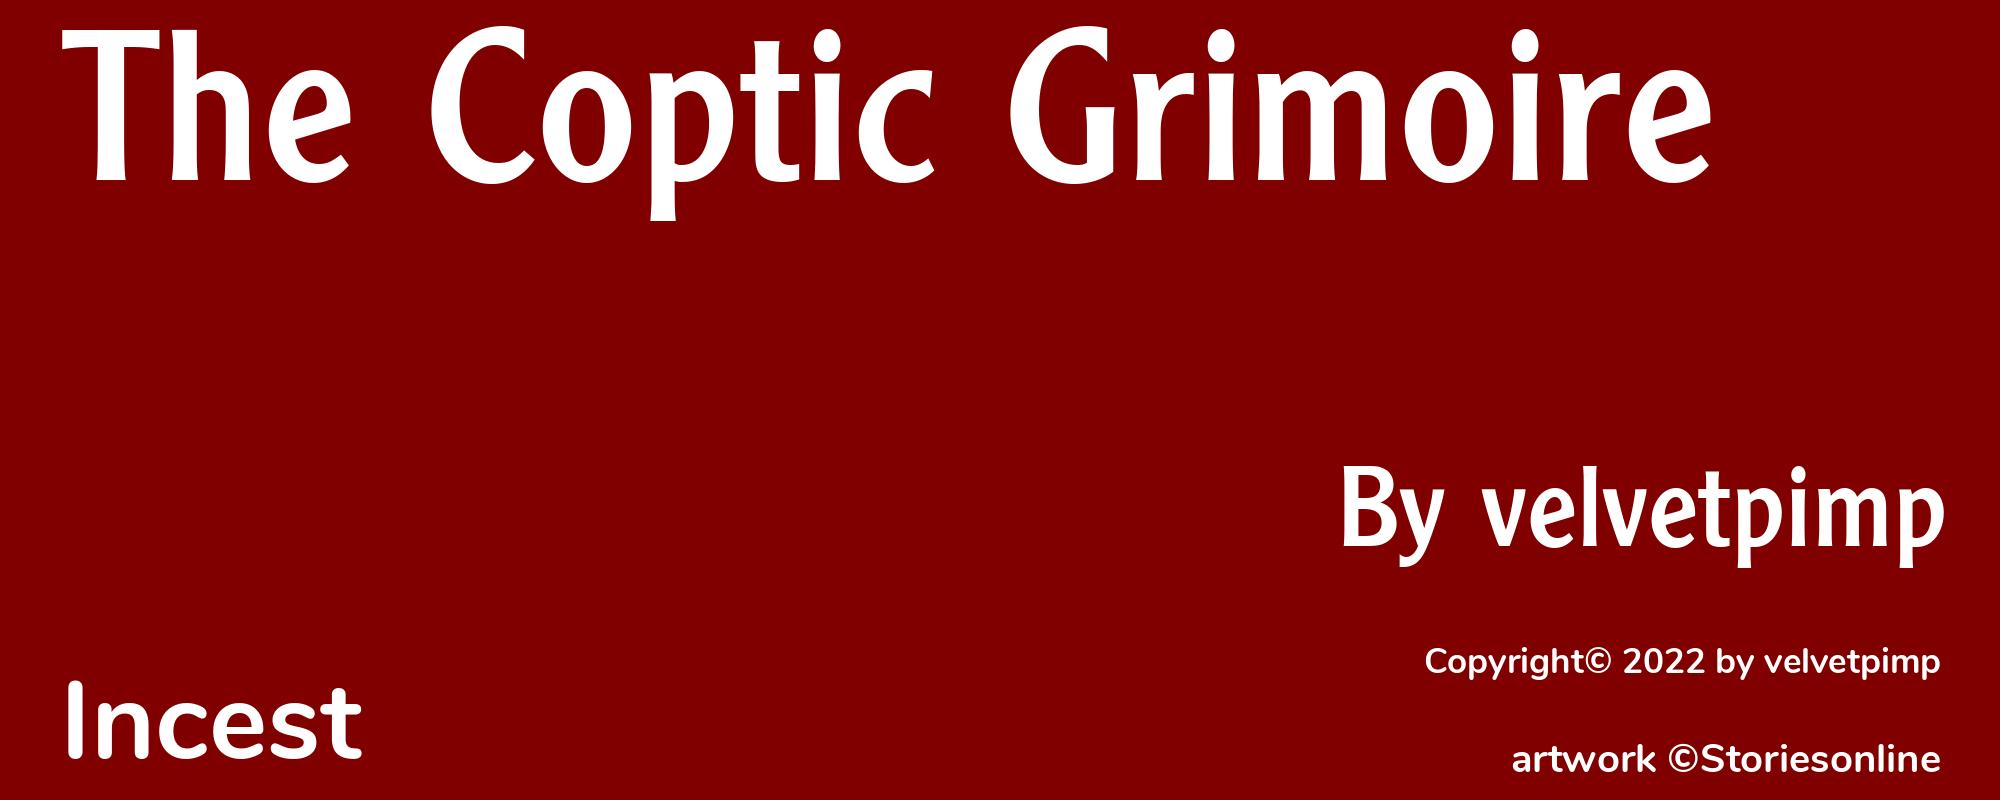 The Coptic Grimoire - Cover